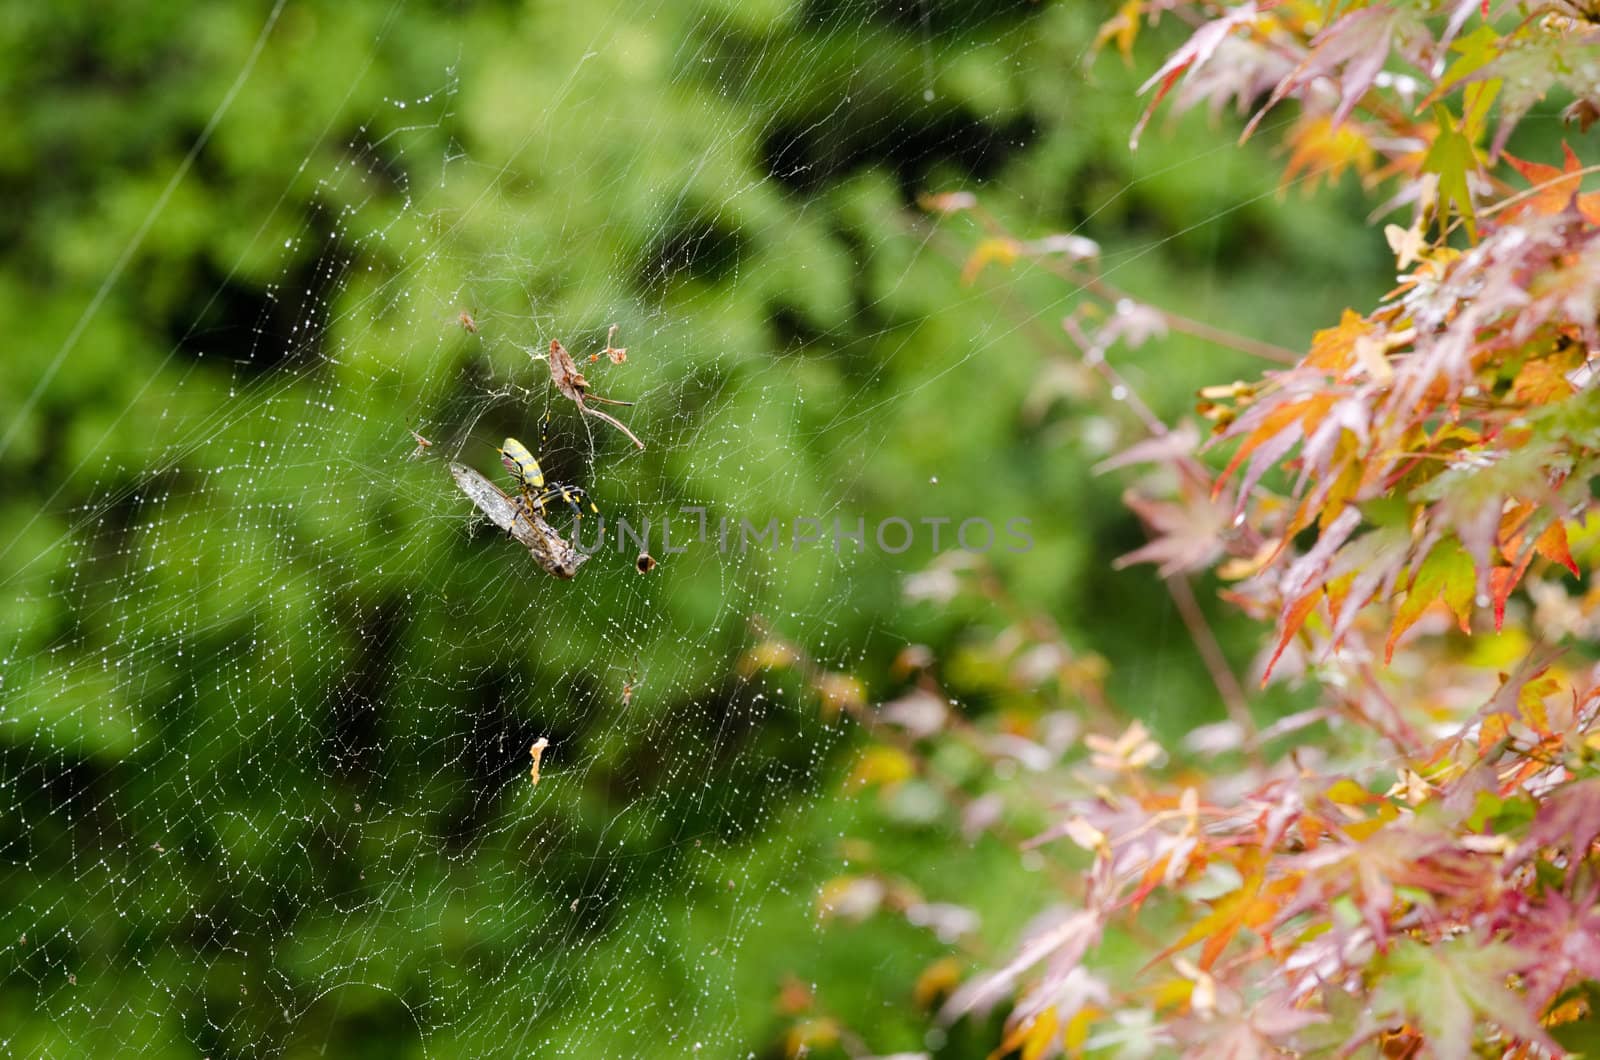 Female of a Golden silk orb-weaver, Nephila clavata on its net eating a cicada